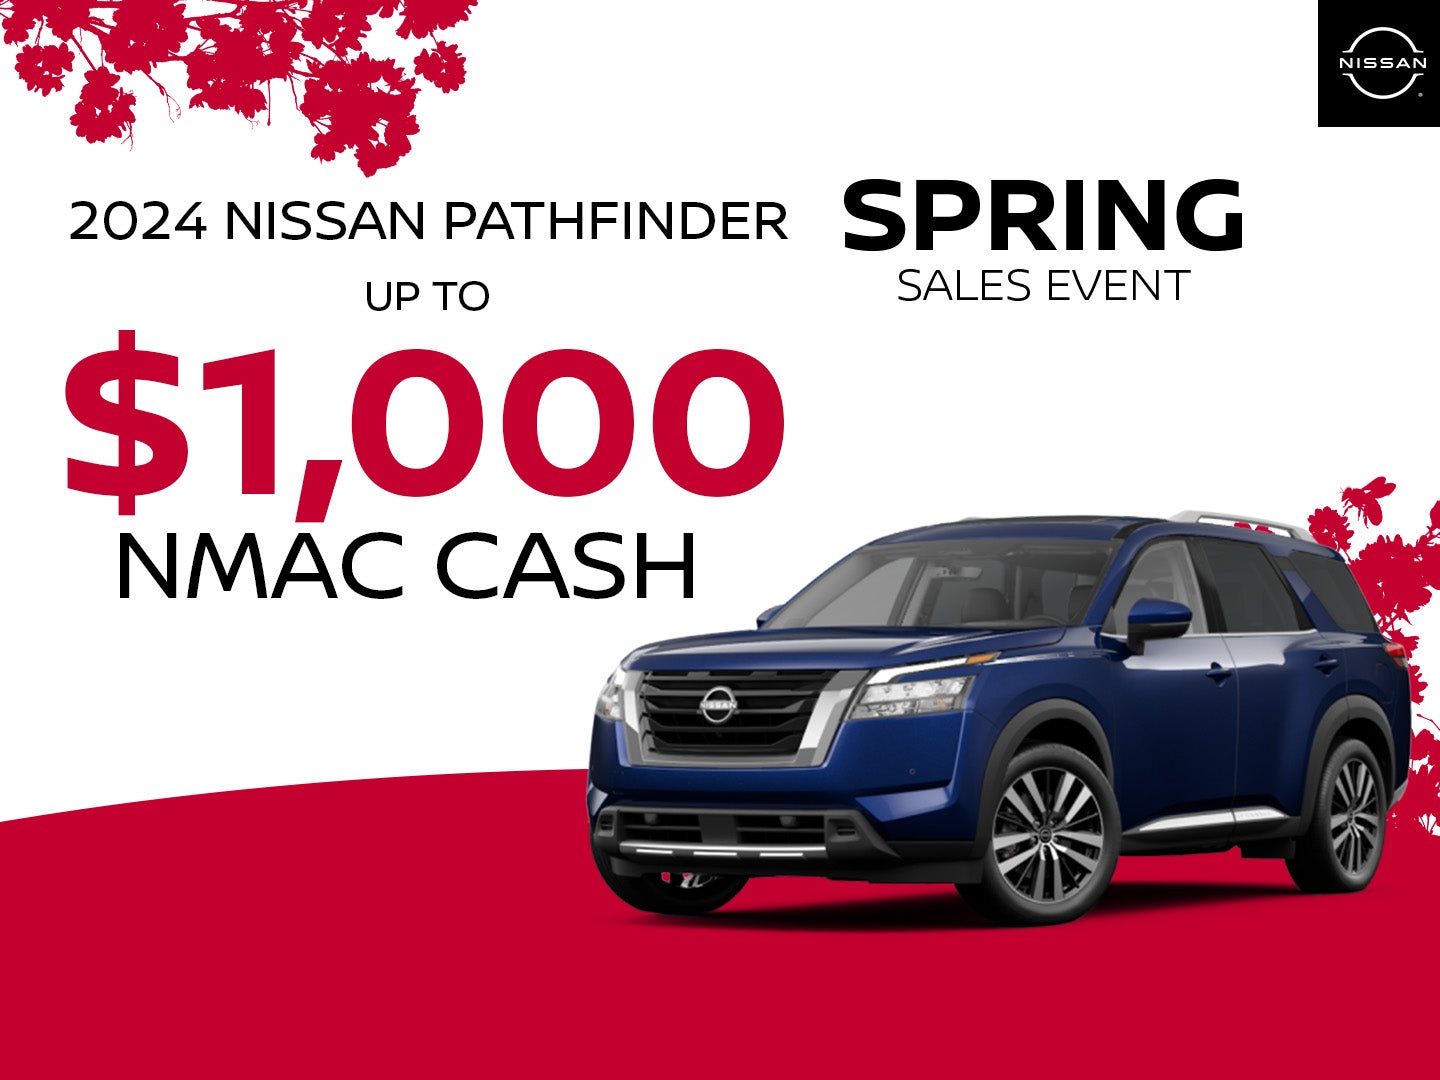 2024 Nissan Pathfinder
Up to $1,000 NMAC CASH